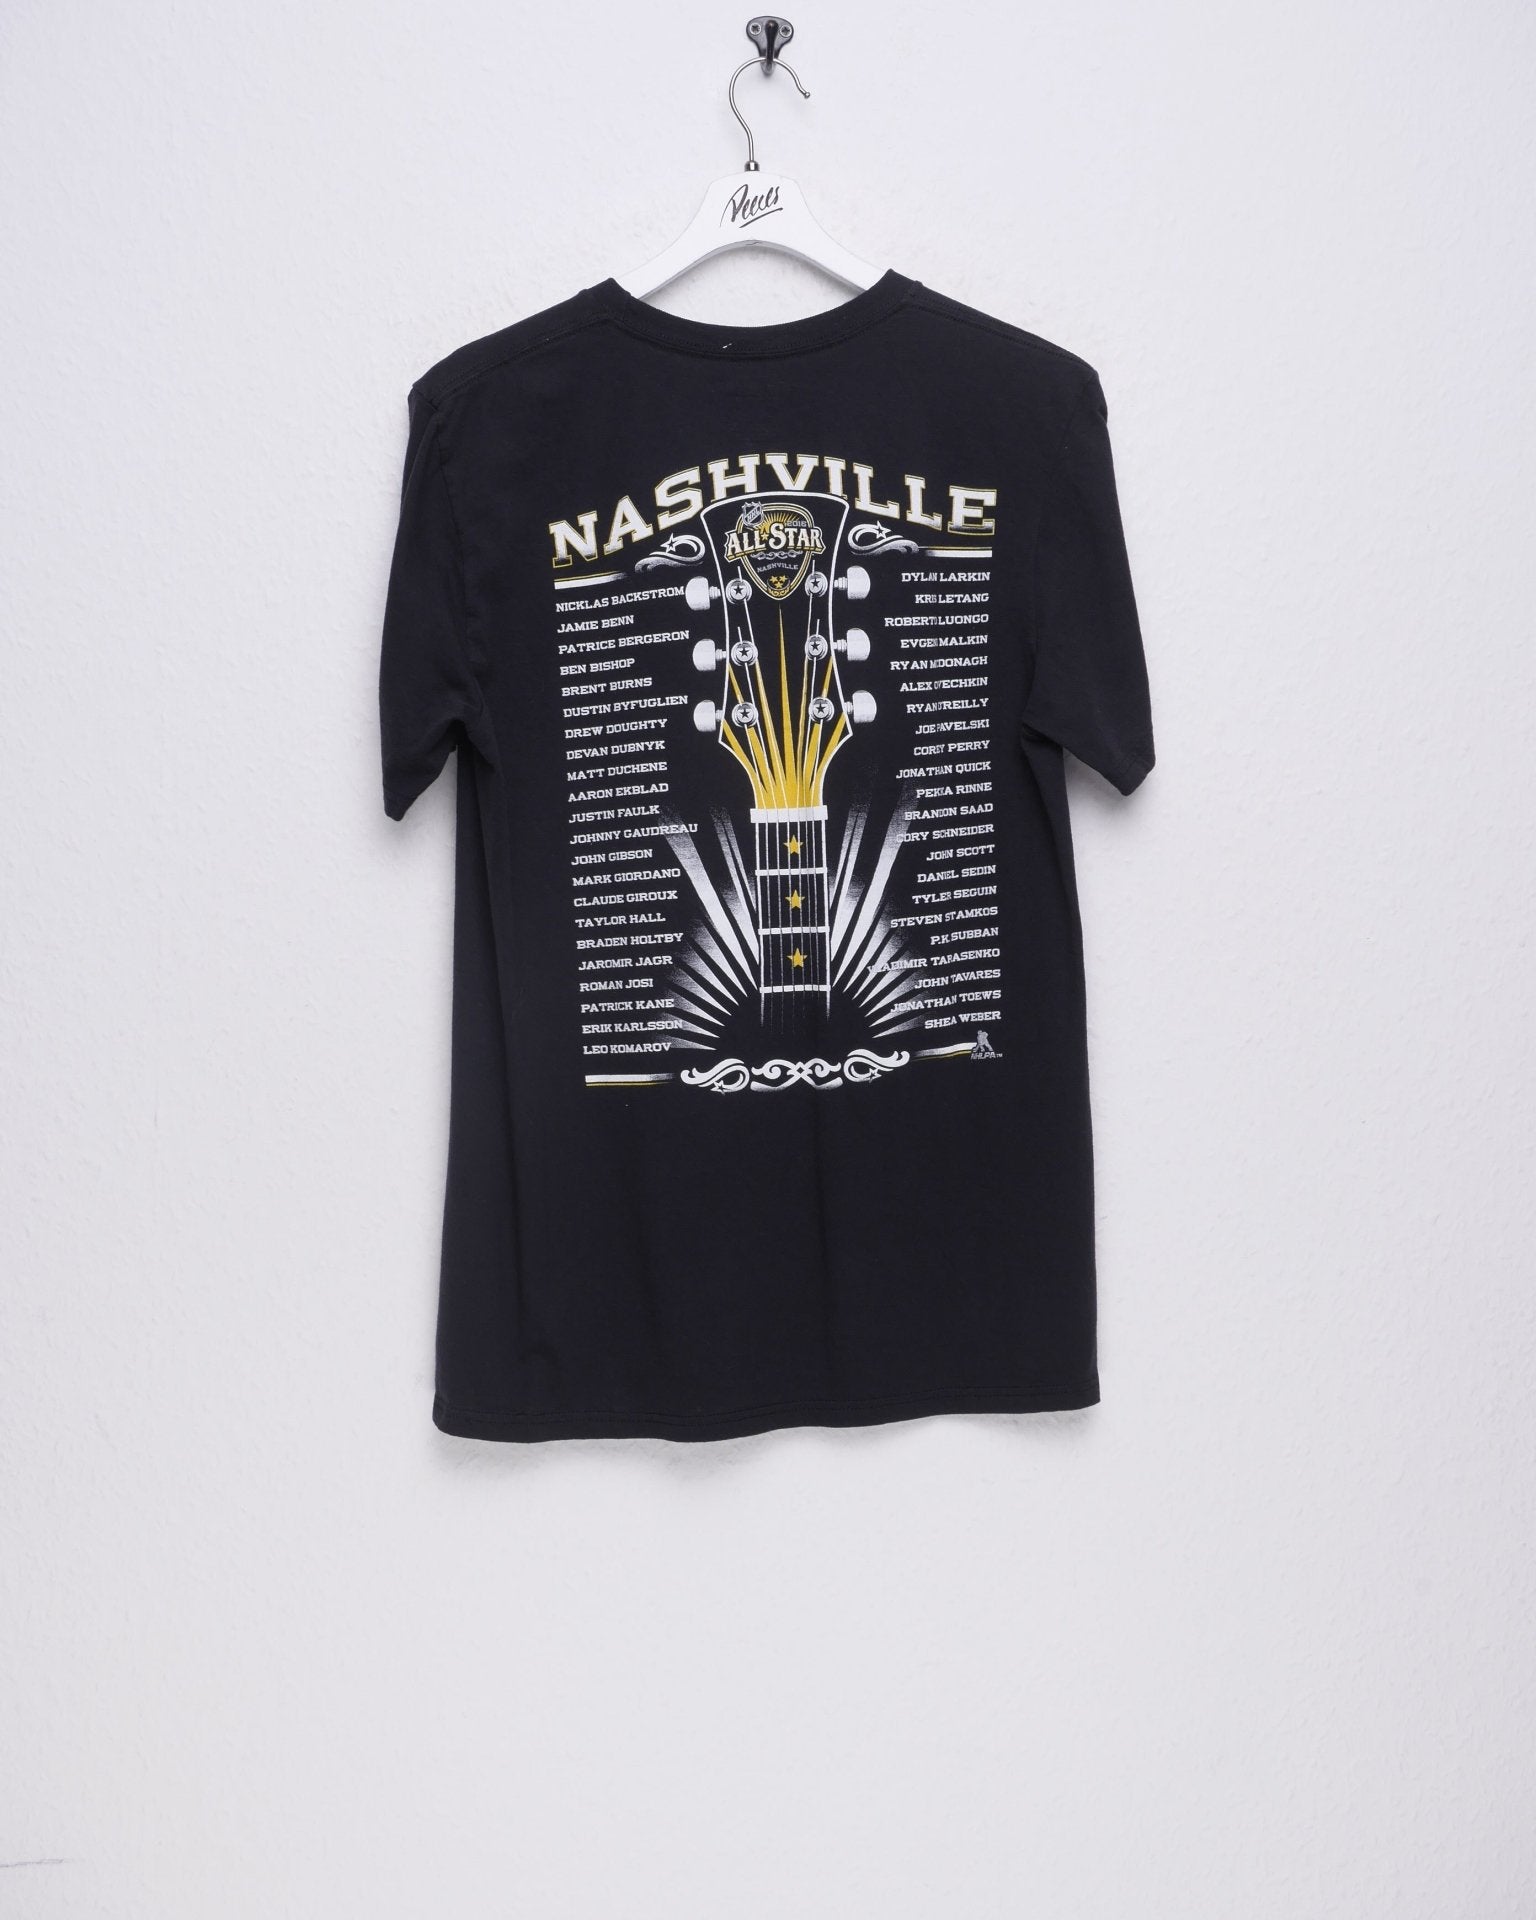 Reebok printed All Star Nashville Graphic Vintage Shirt - Peeces